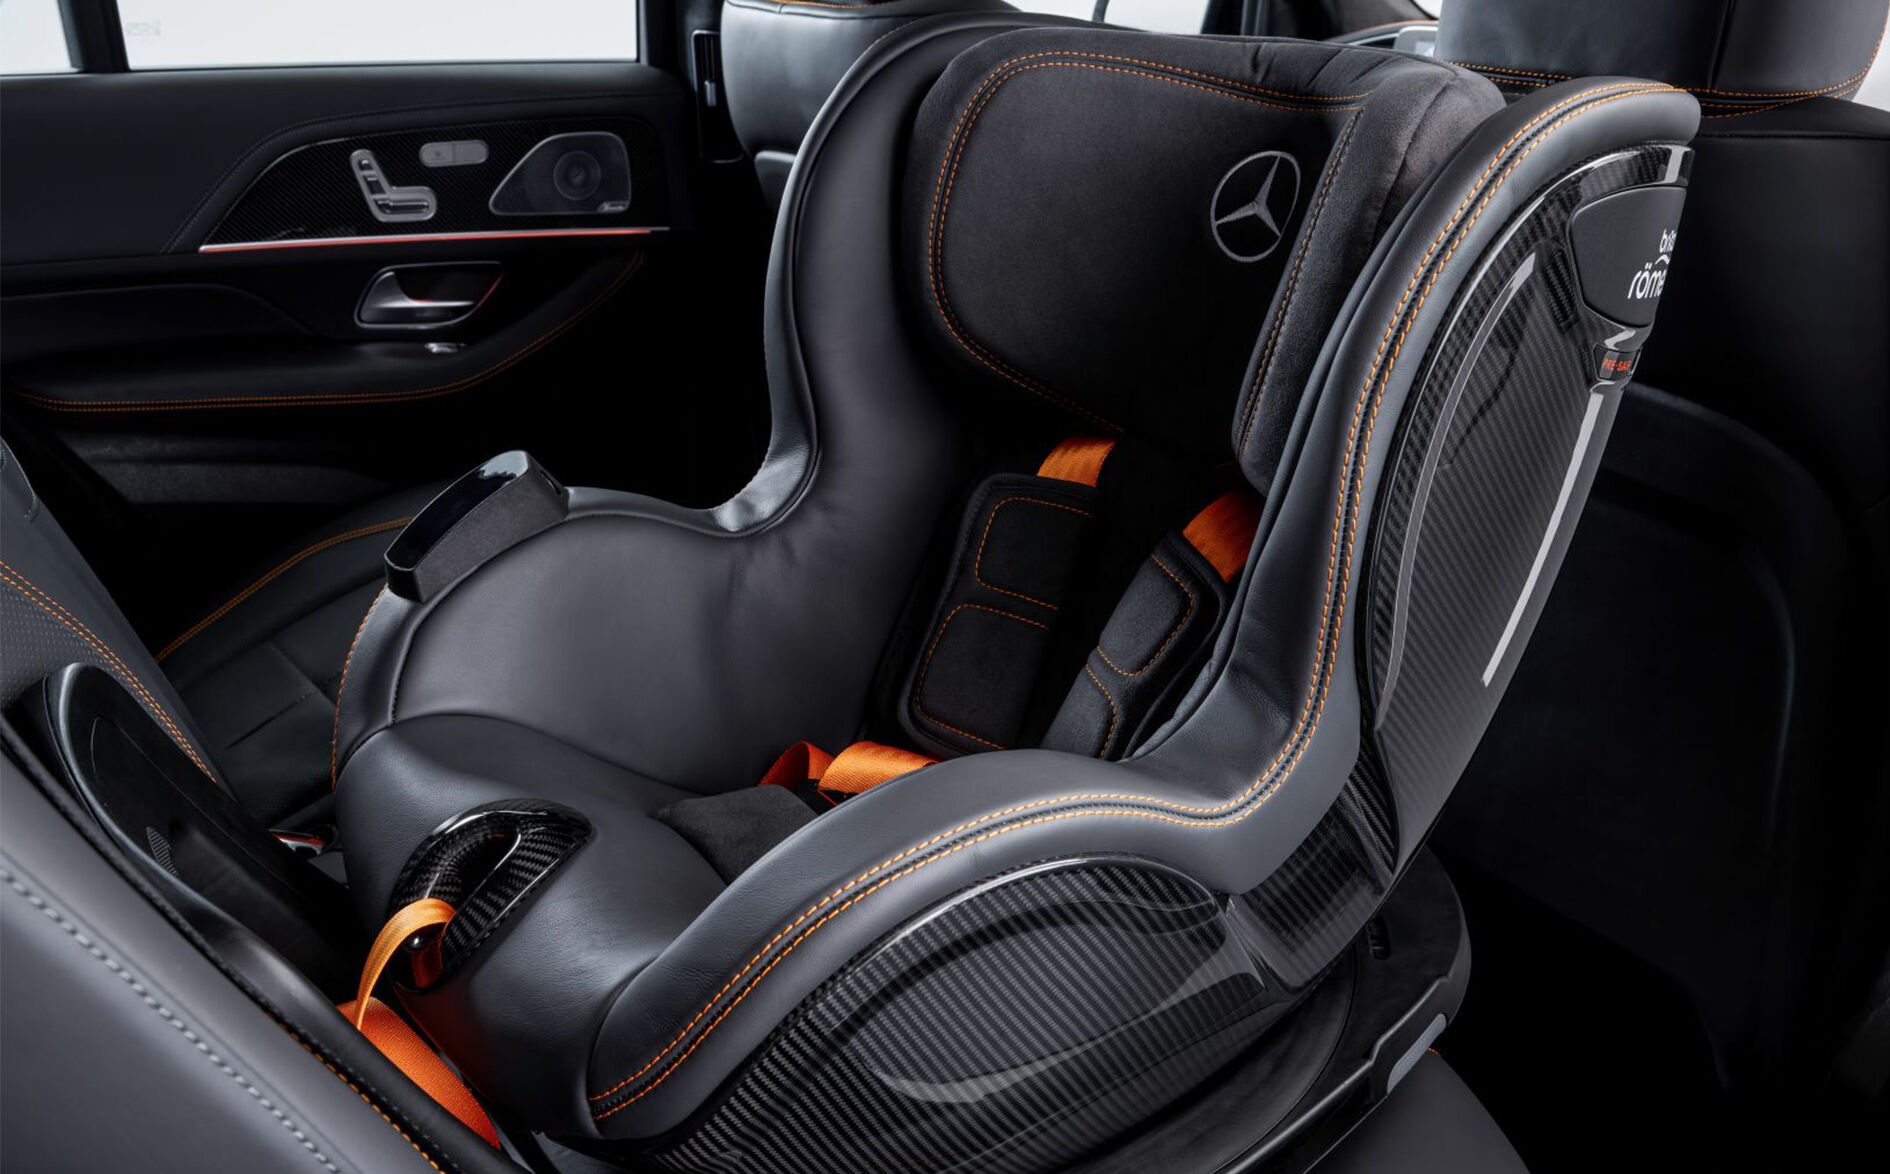 The Mercedes-Benz child seat study 